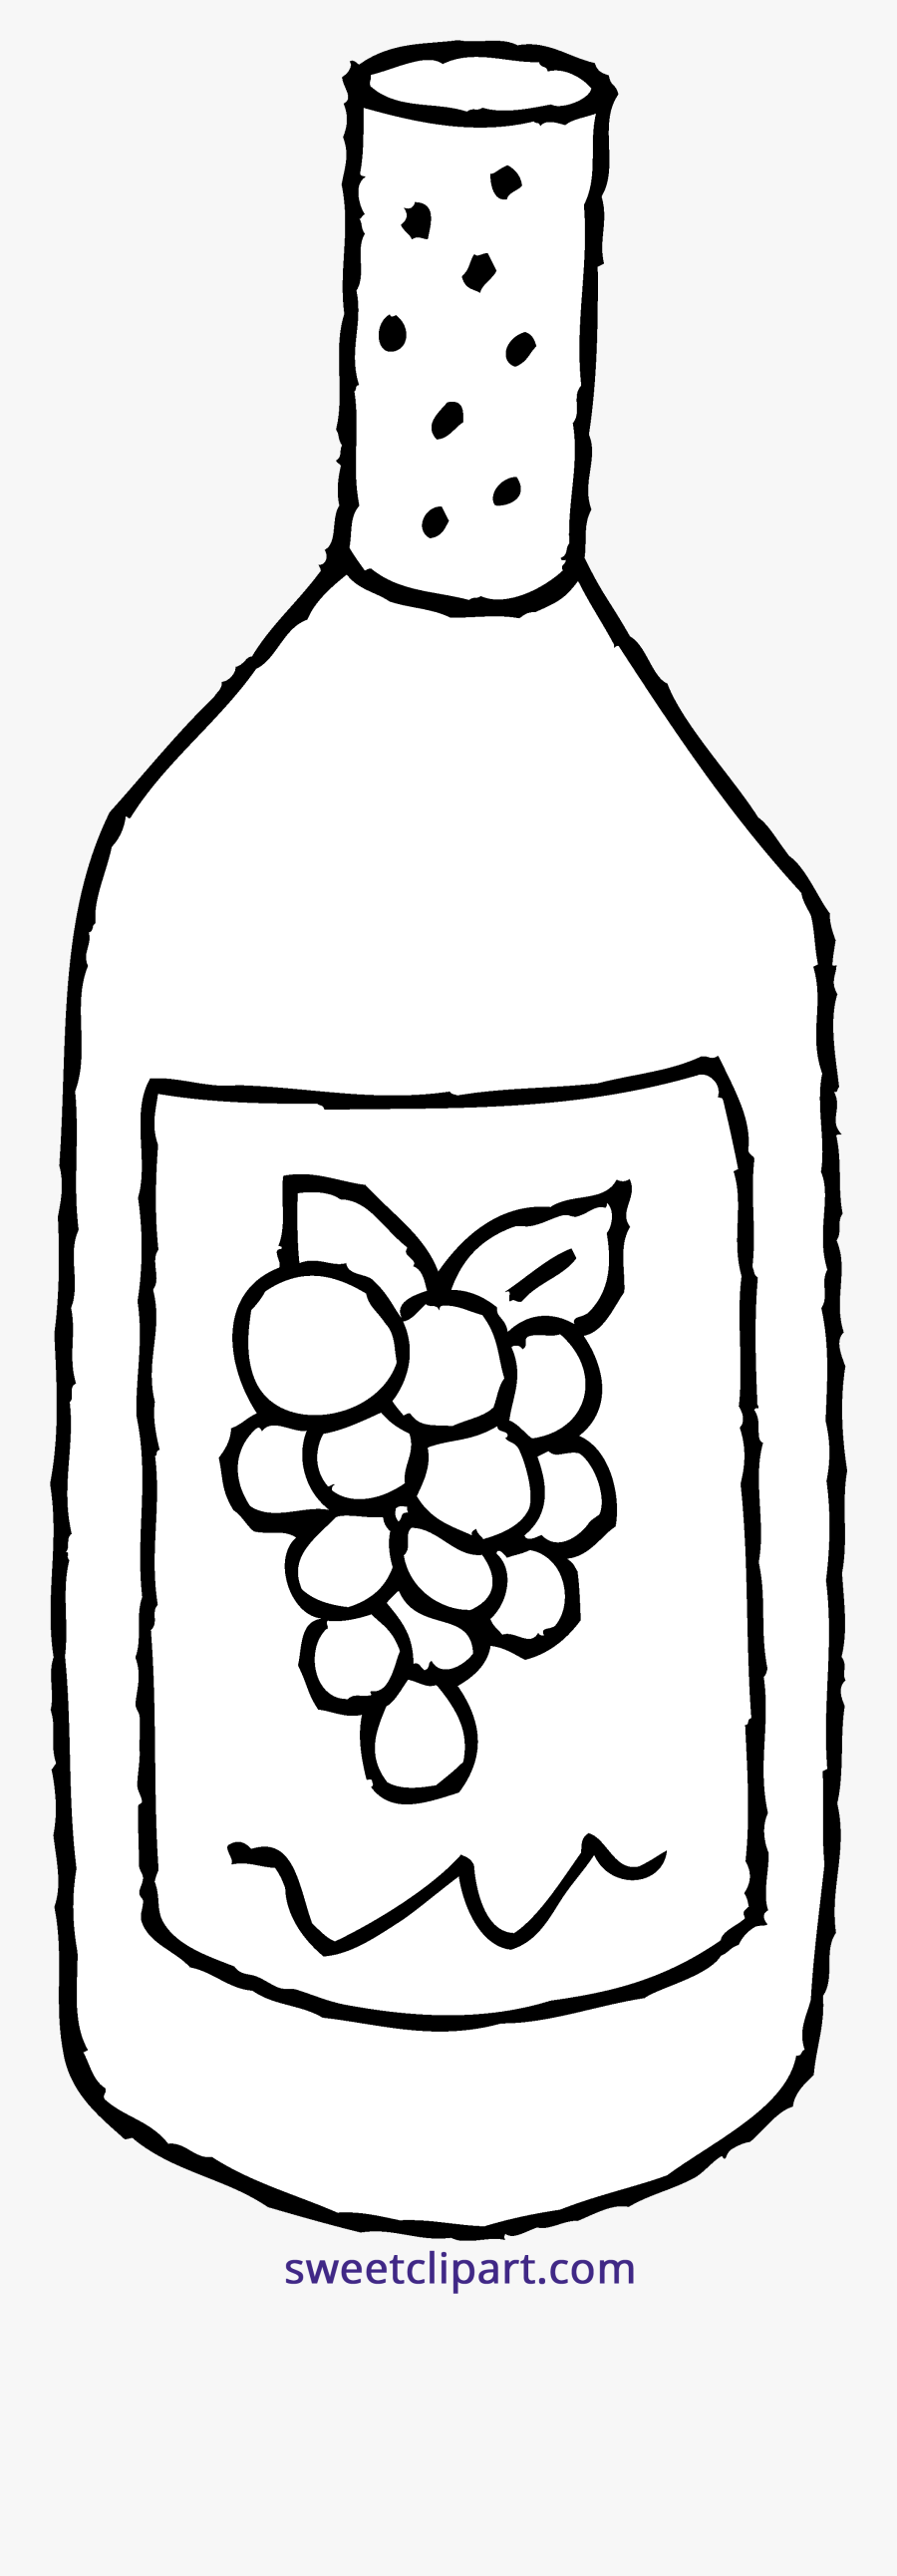 Clip Wine Bottle Clipart Black And White - Wine Bottle Clipart Black And White, Transparent Clipart